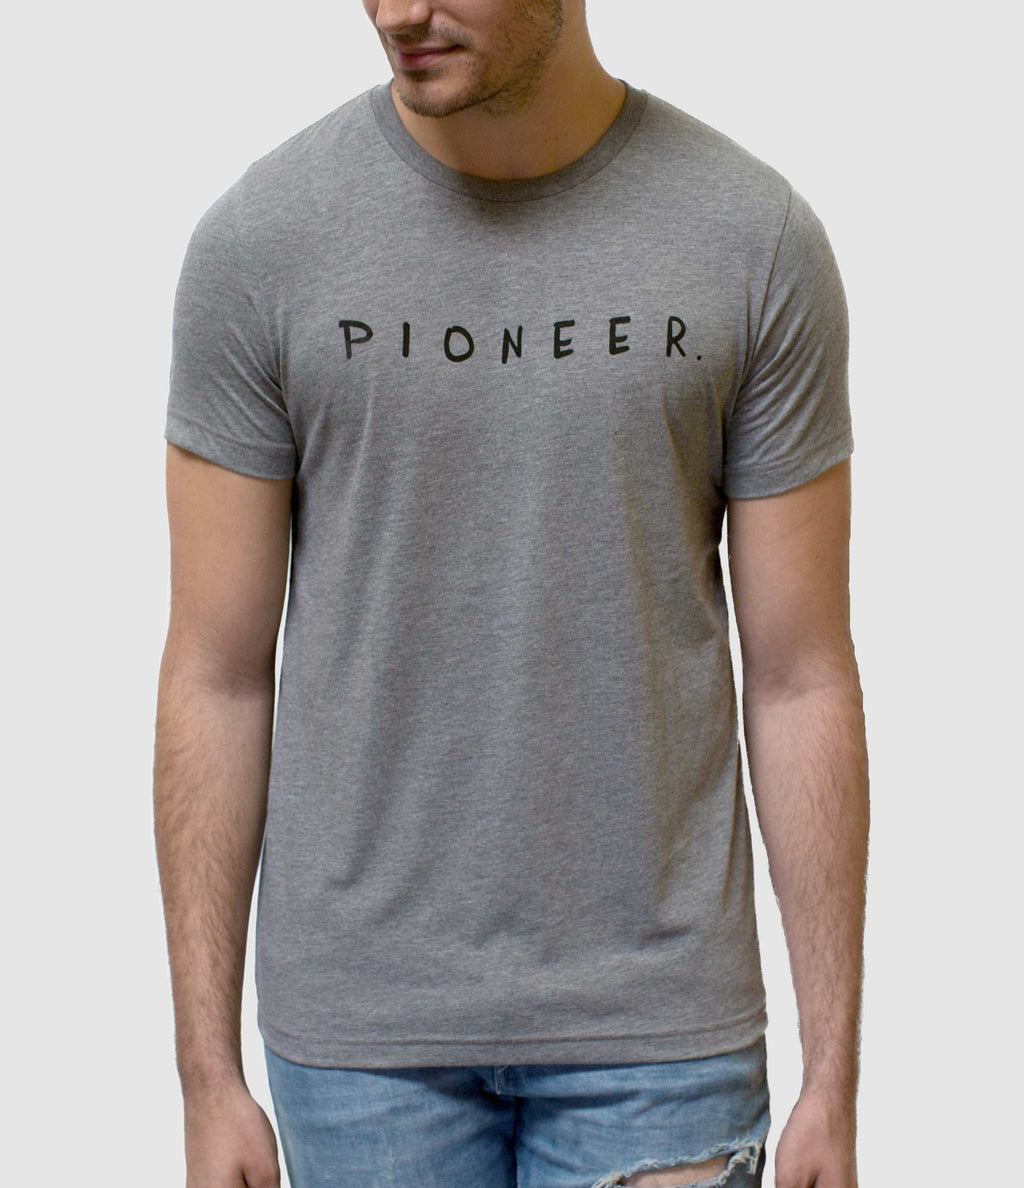 PIONEER T-SHIRT